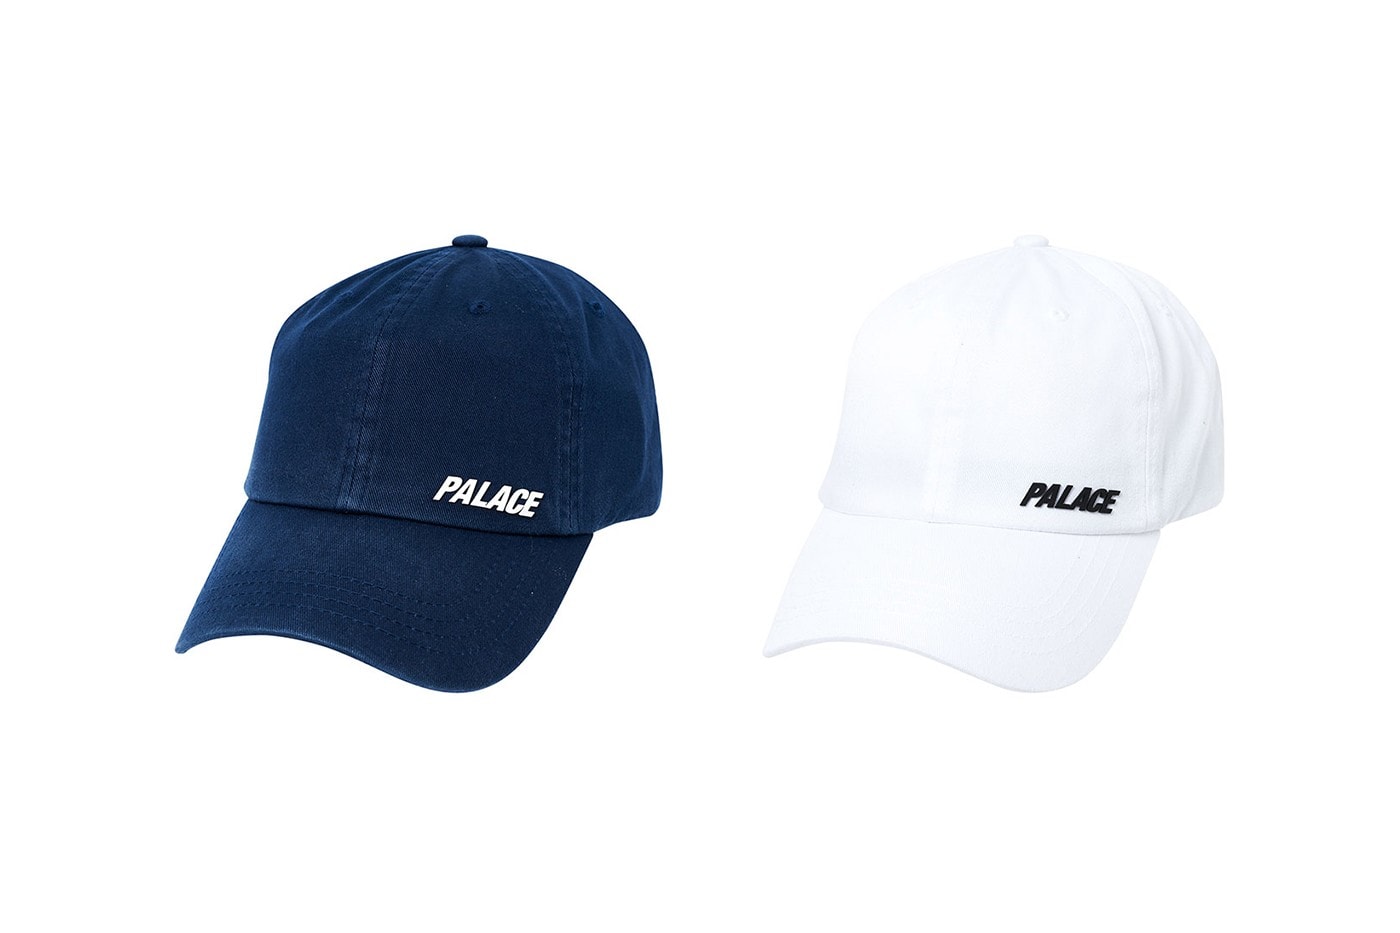 Palace 正式發佈 2019 秋季帽款系列